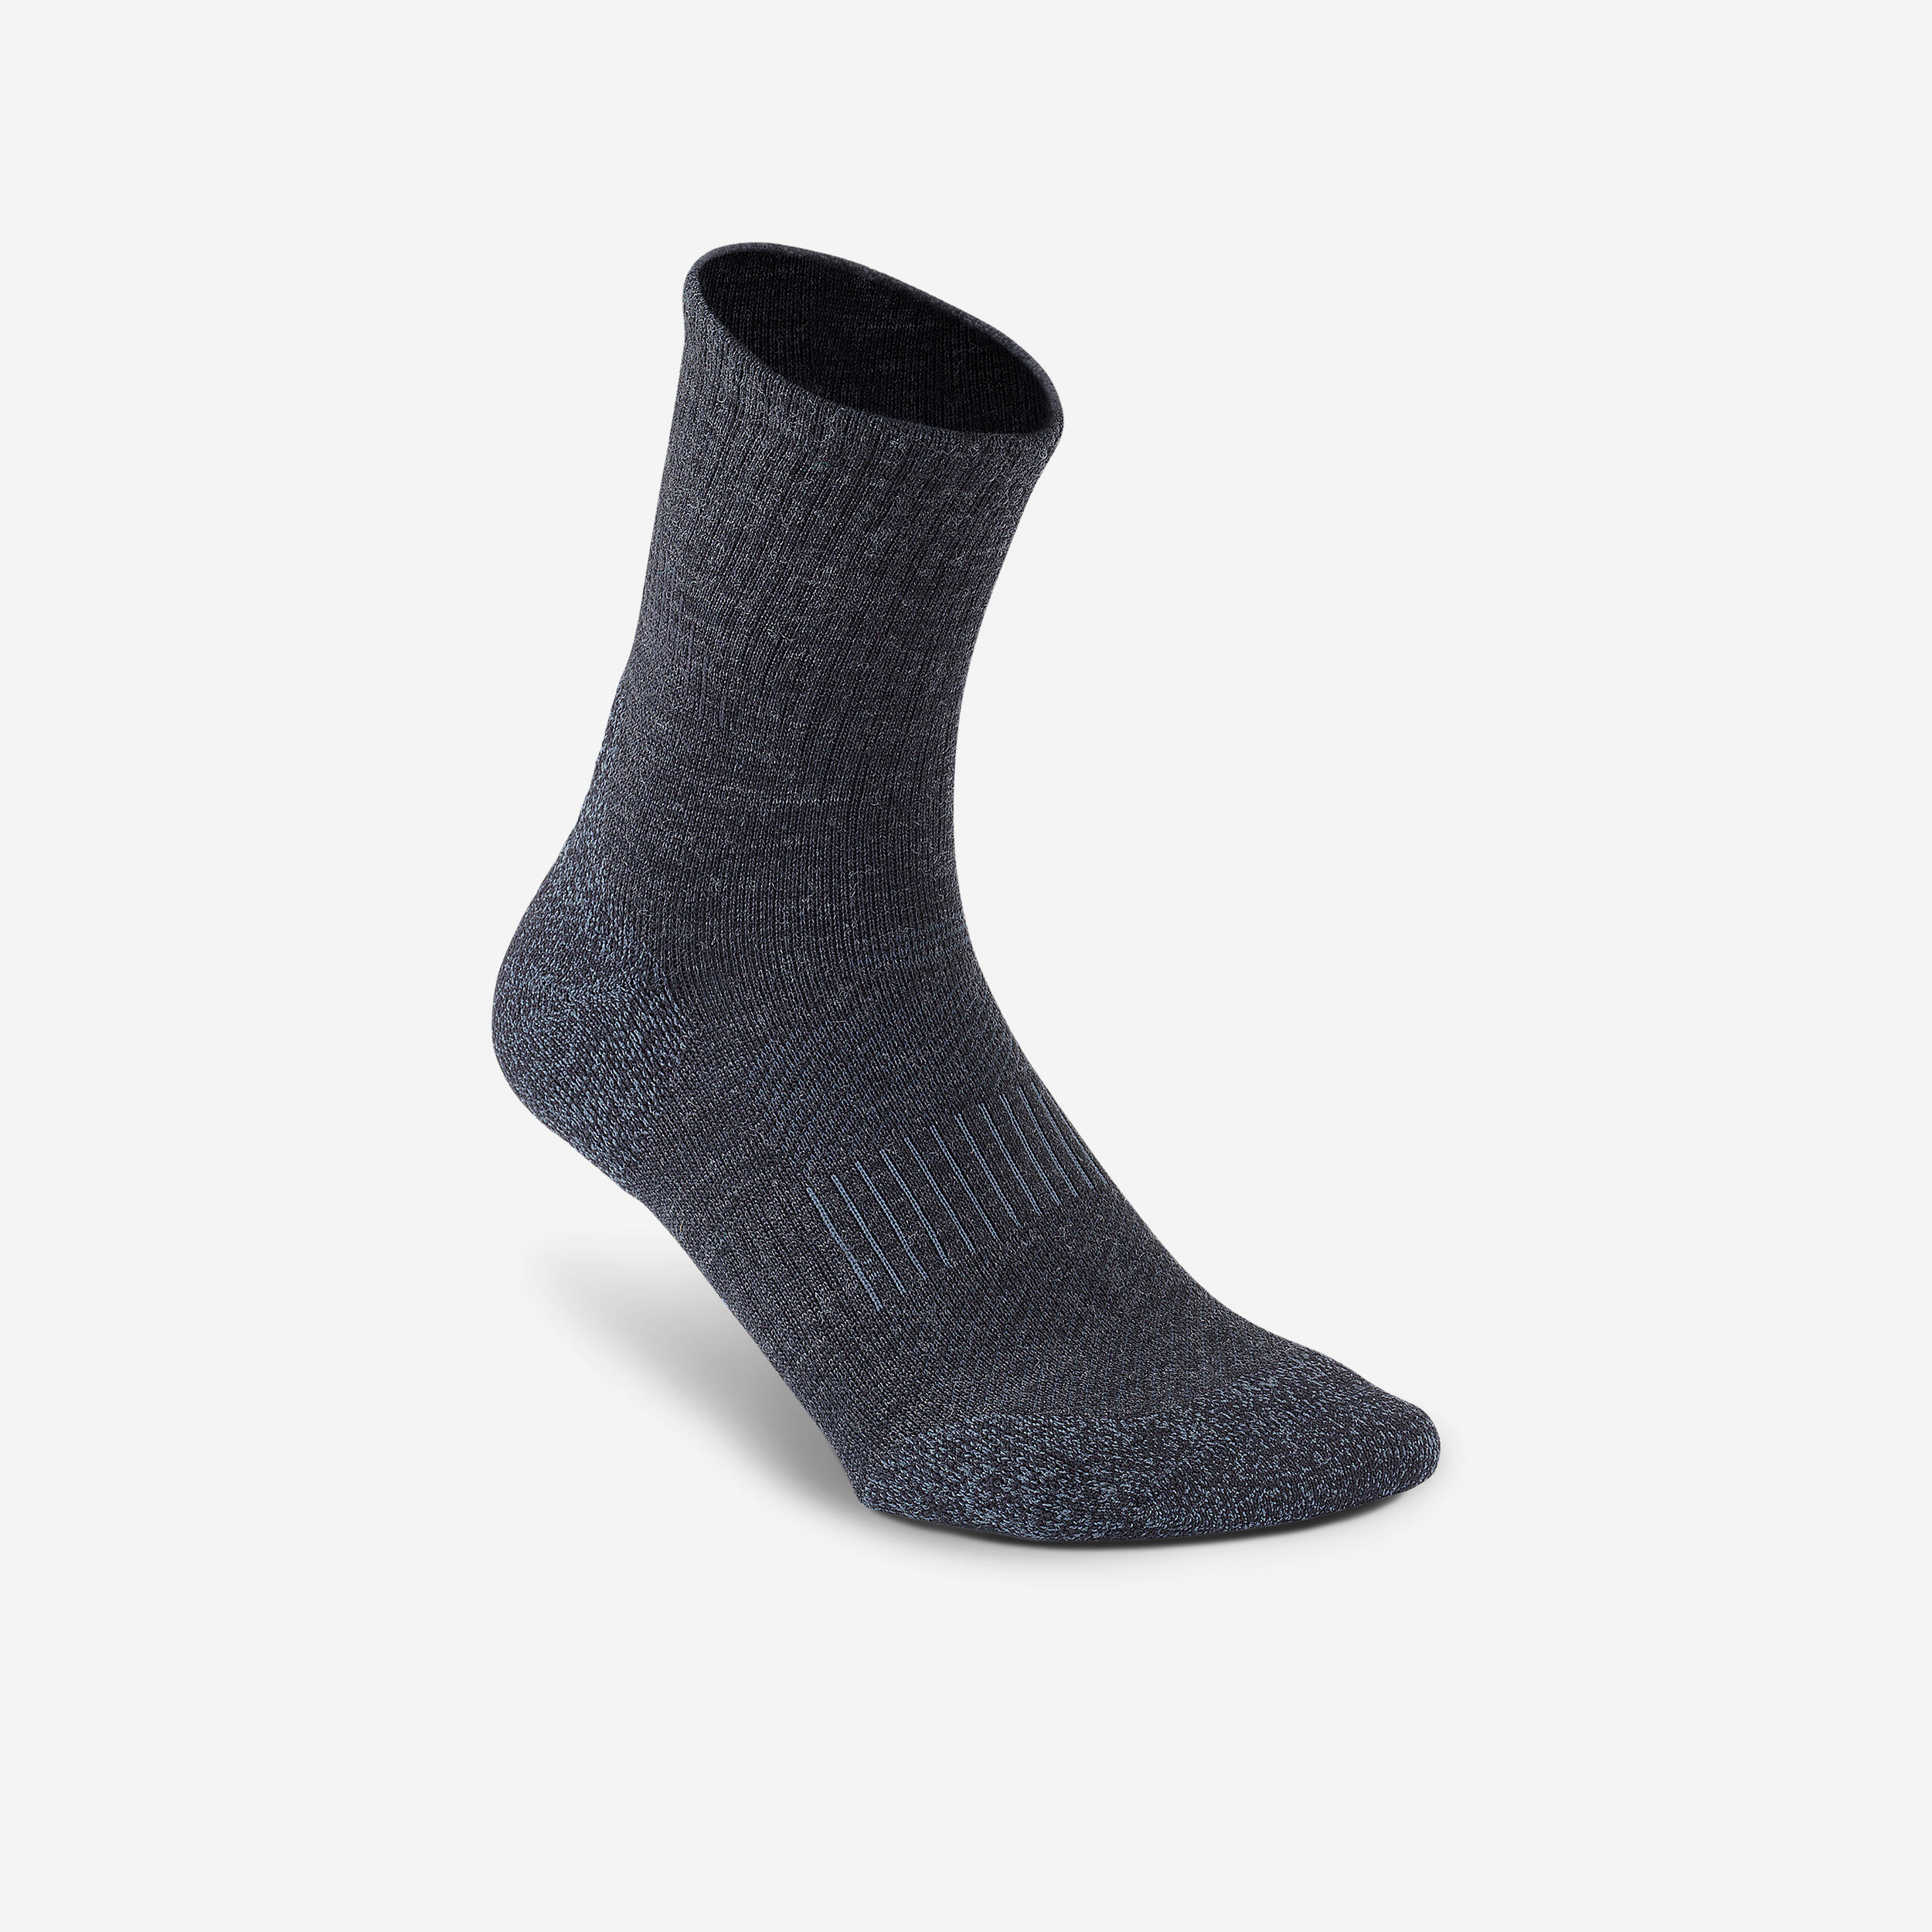 WS 580 Warm Fitness/Nordic walking Socks - Black 1/5